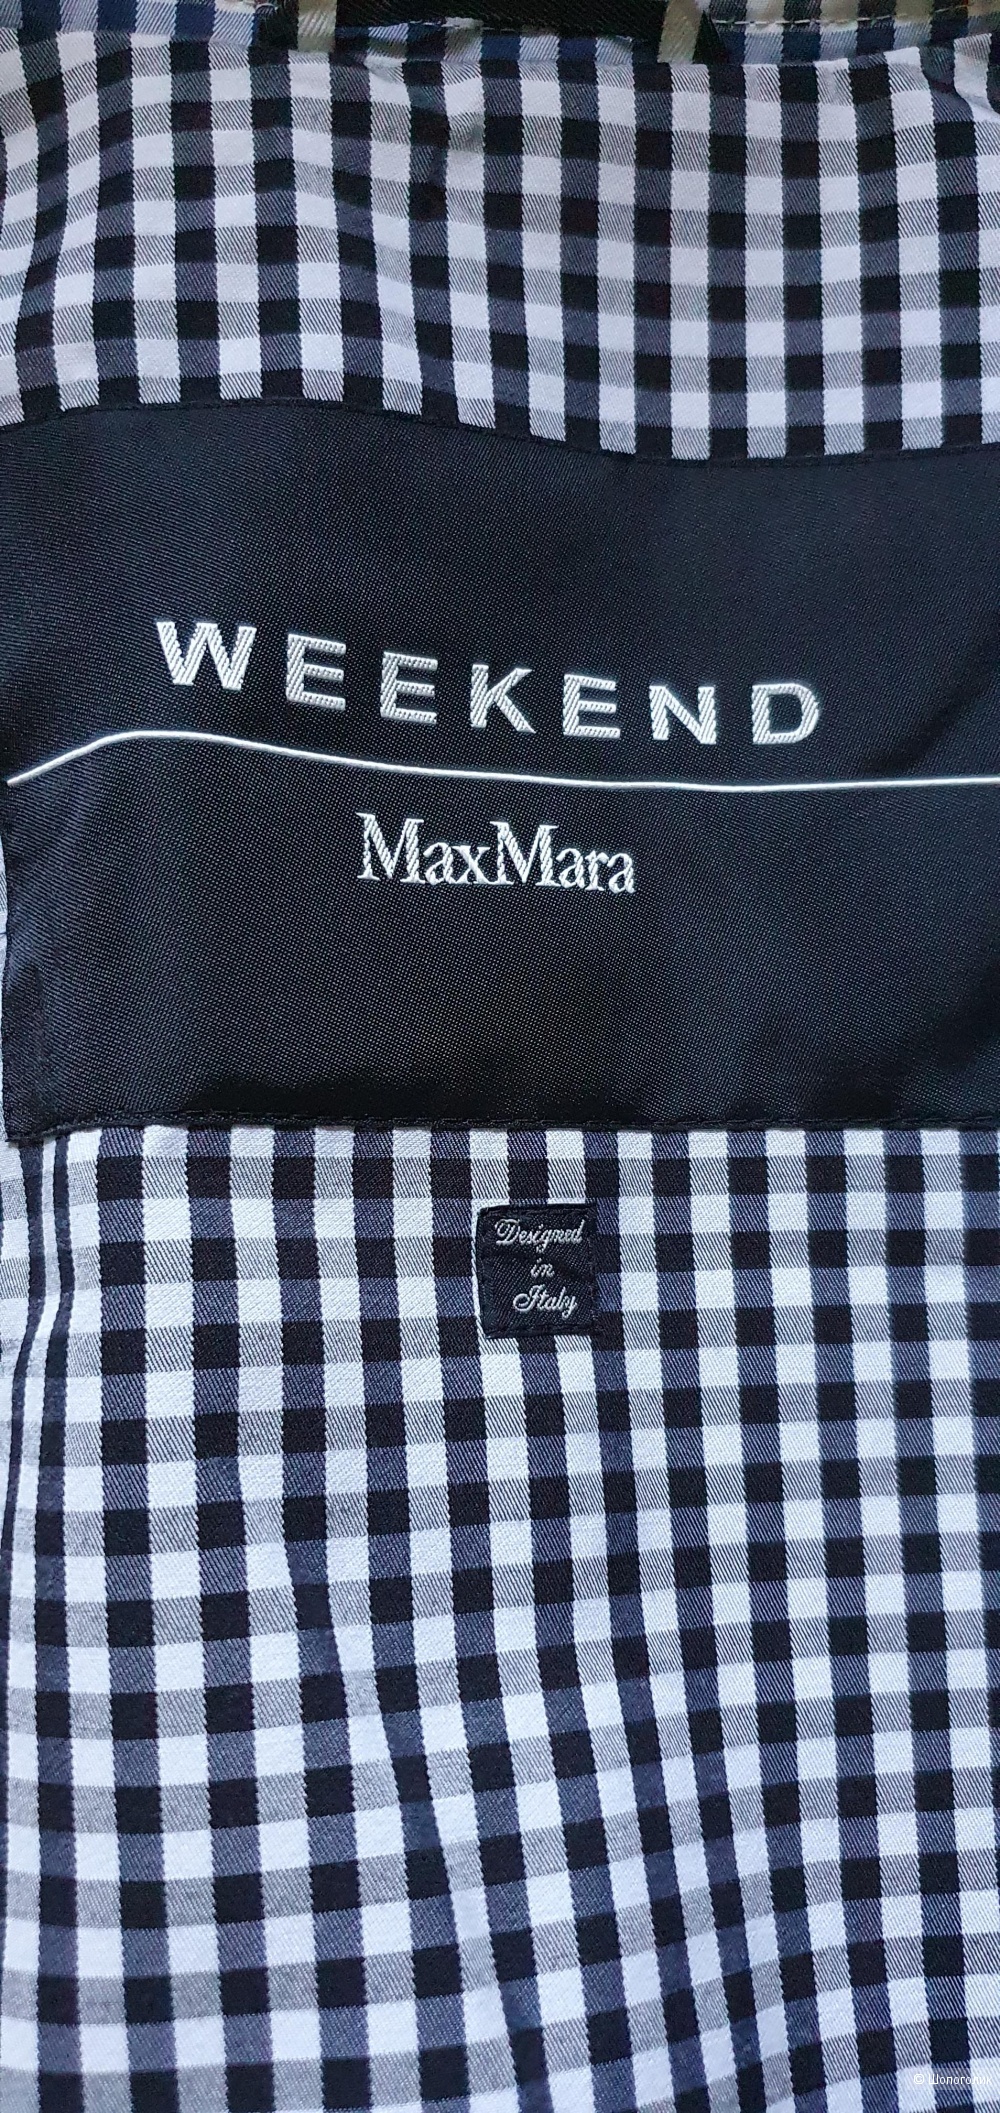 Тренч MaxMara weekend размер it42